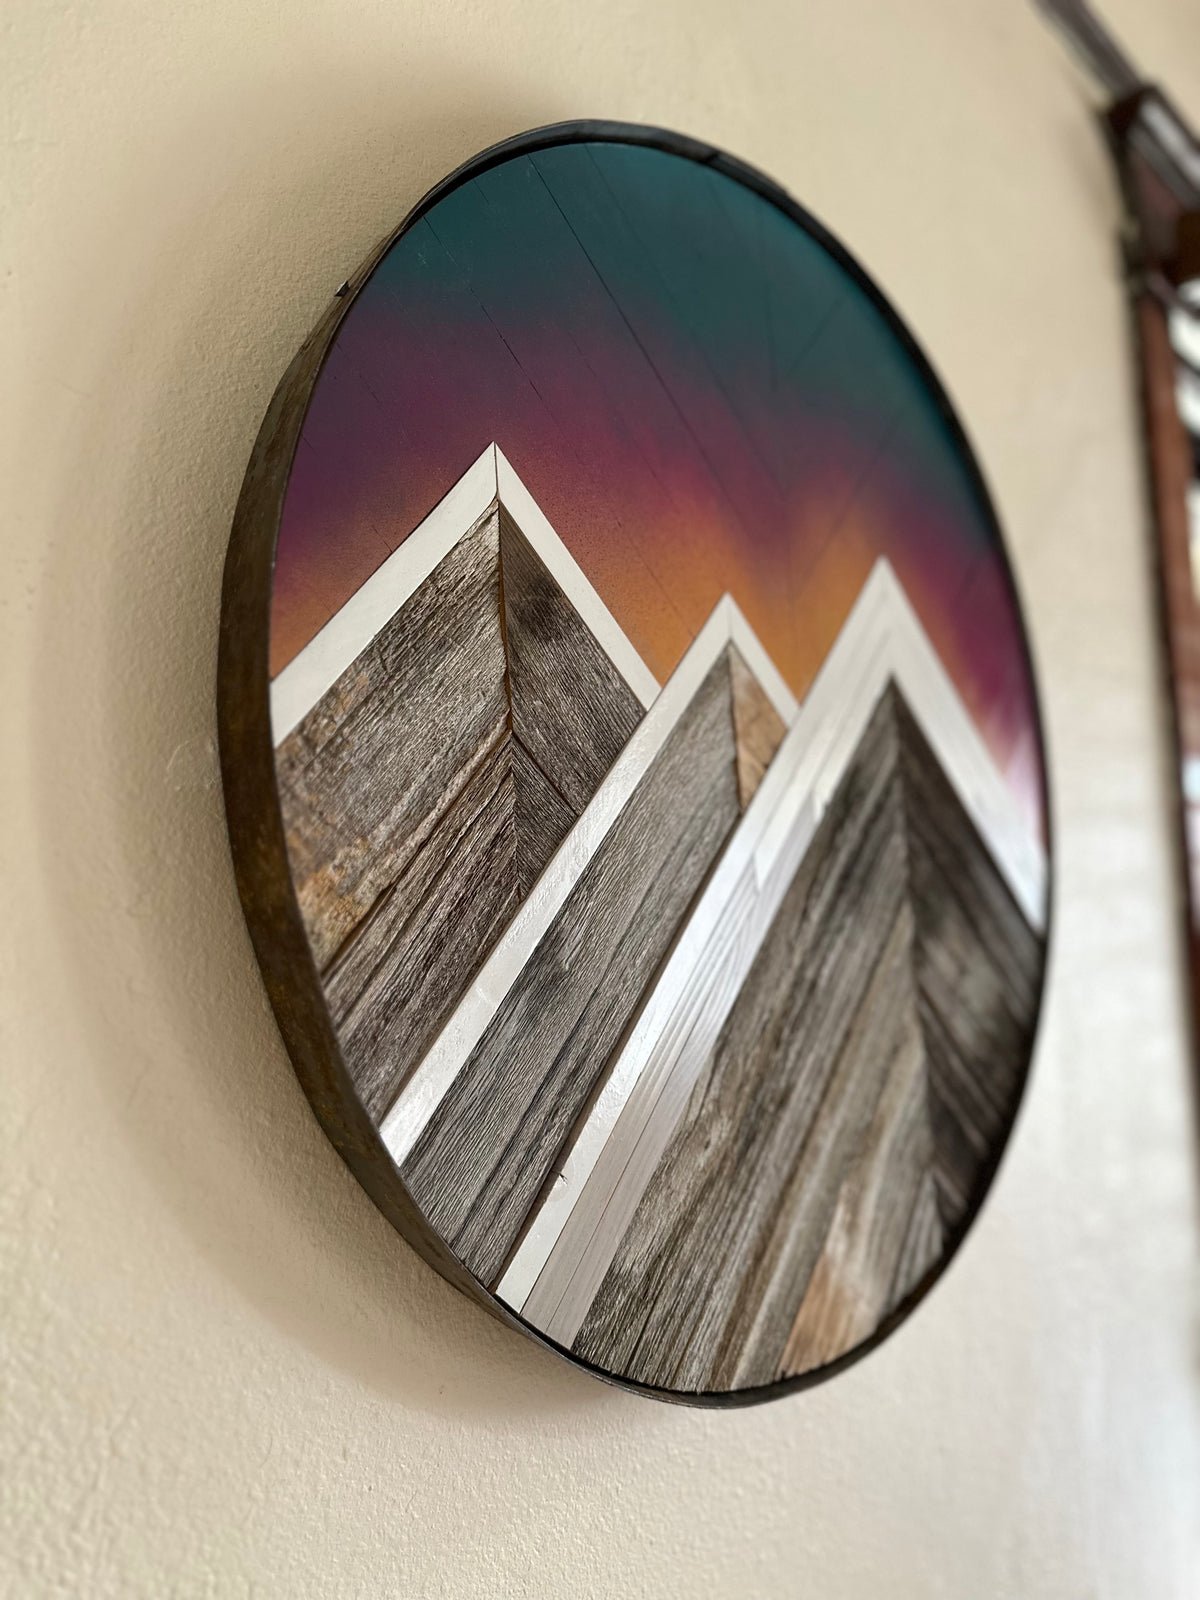 Sunrise Peaks Round Reclaimed Cedar Mosaic, framed in vintage whiskey barrel ring